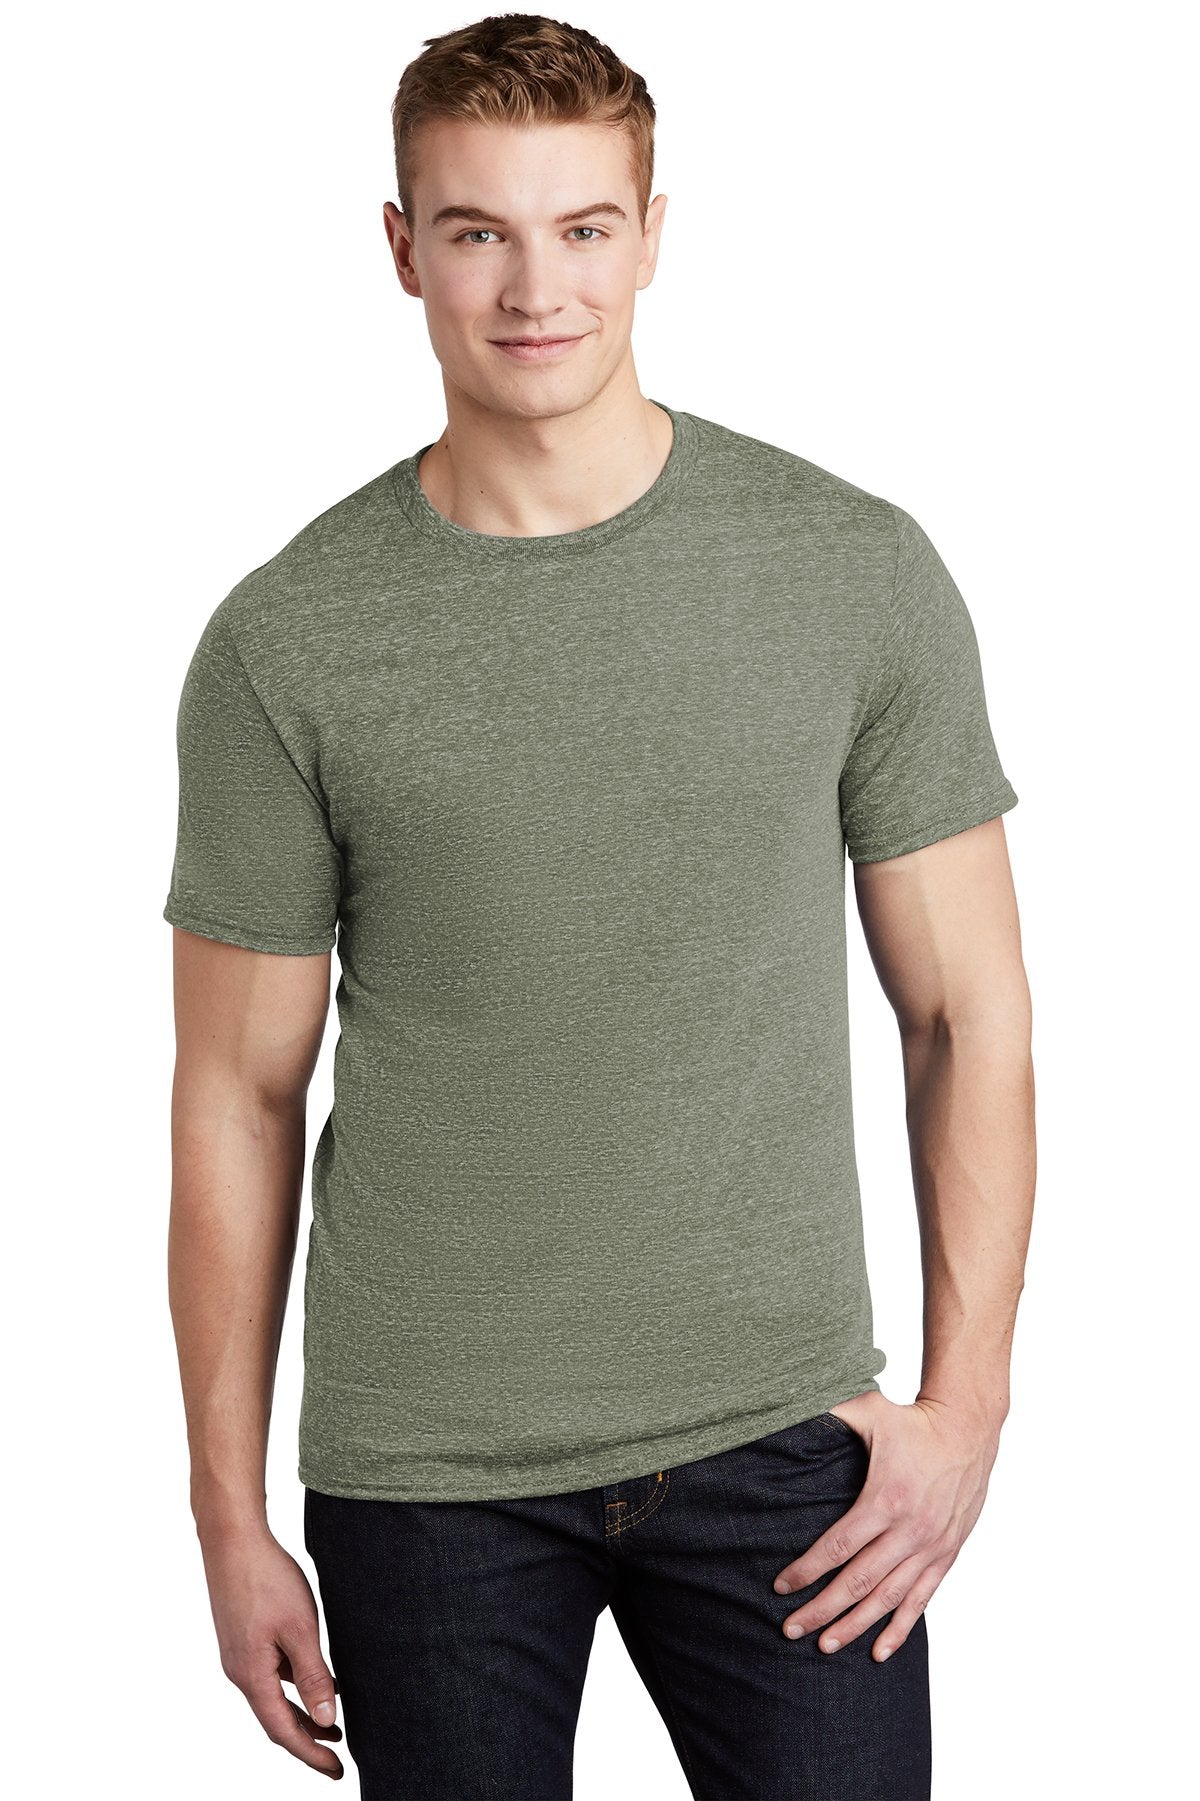 jerzees snow heather jersey t-shirt 88m military green